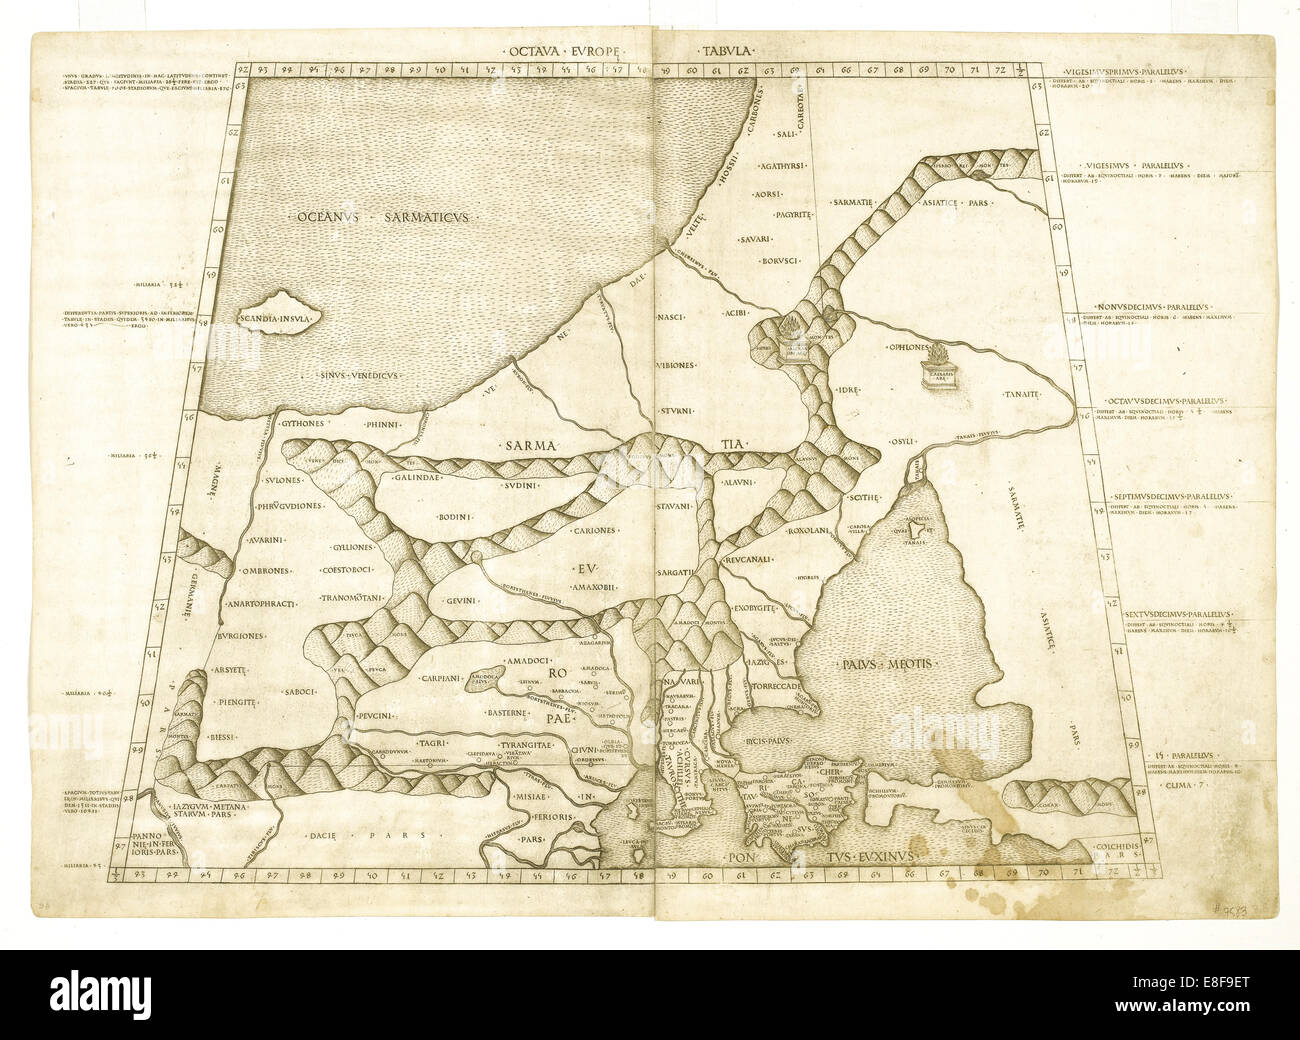 Map of Muscovy by Ptolemy (Octava Europe Tabula). Artist: Anonymous master Stock Photo